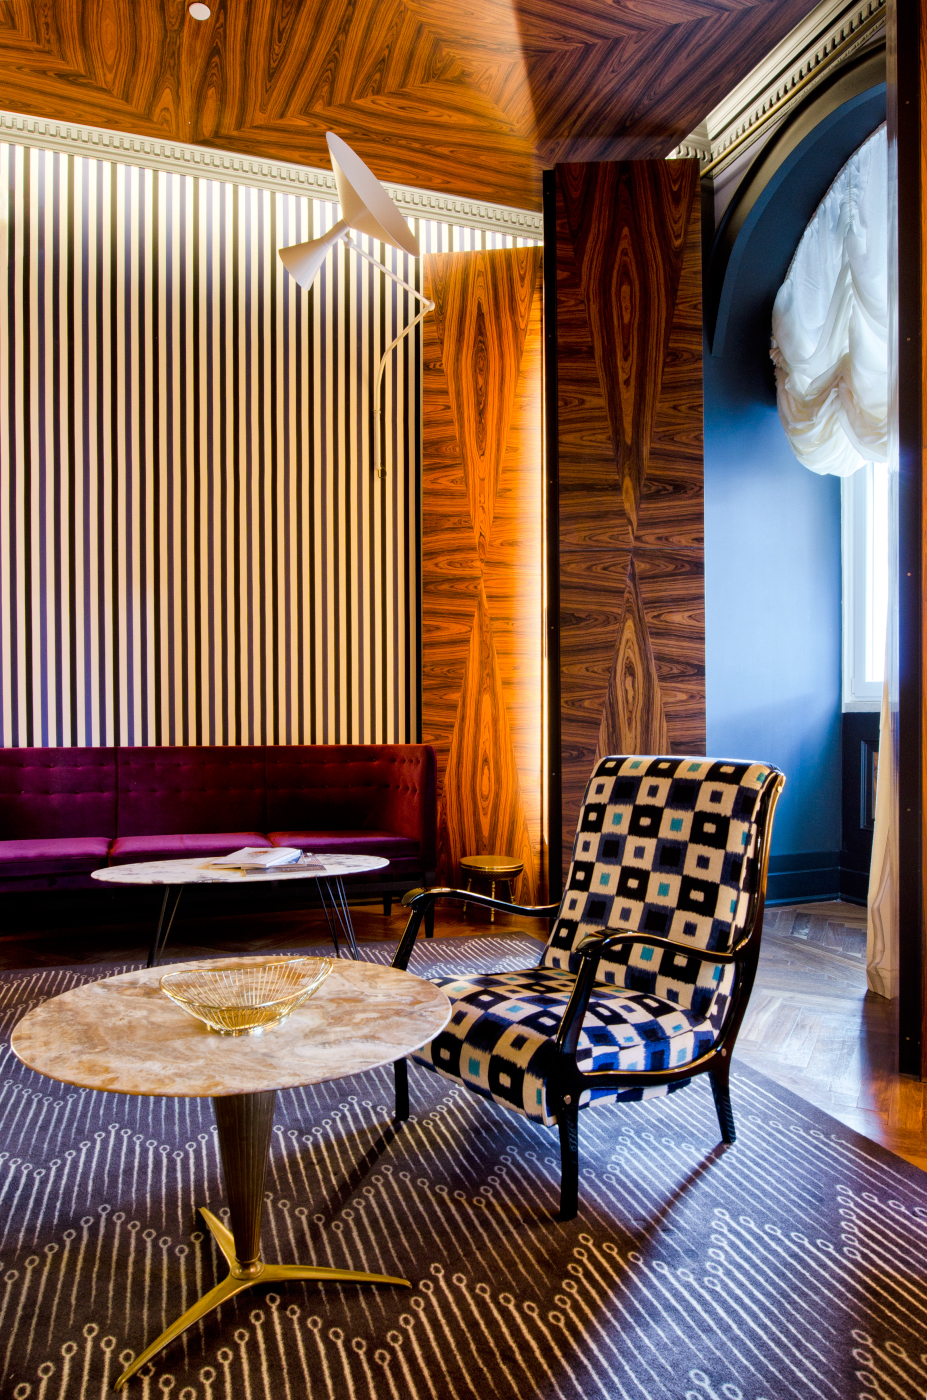 Hospitality hotel restaurant tourism travel & leisure decor architectural photography